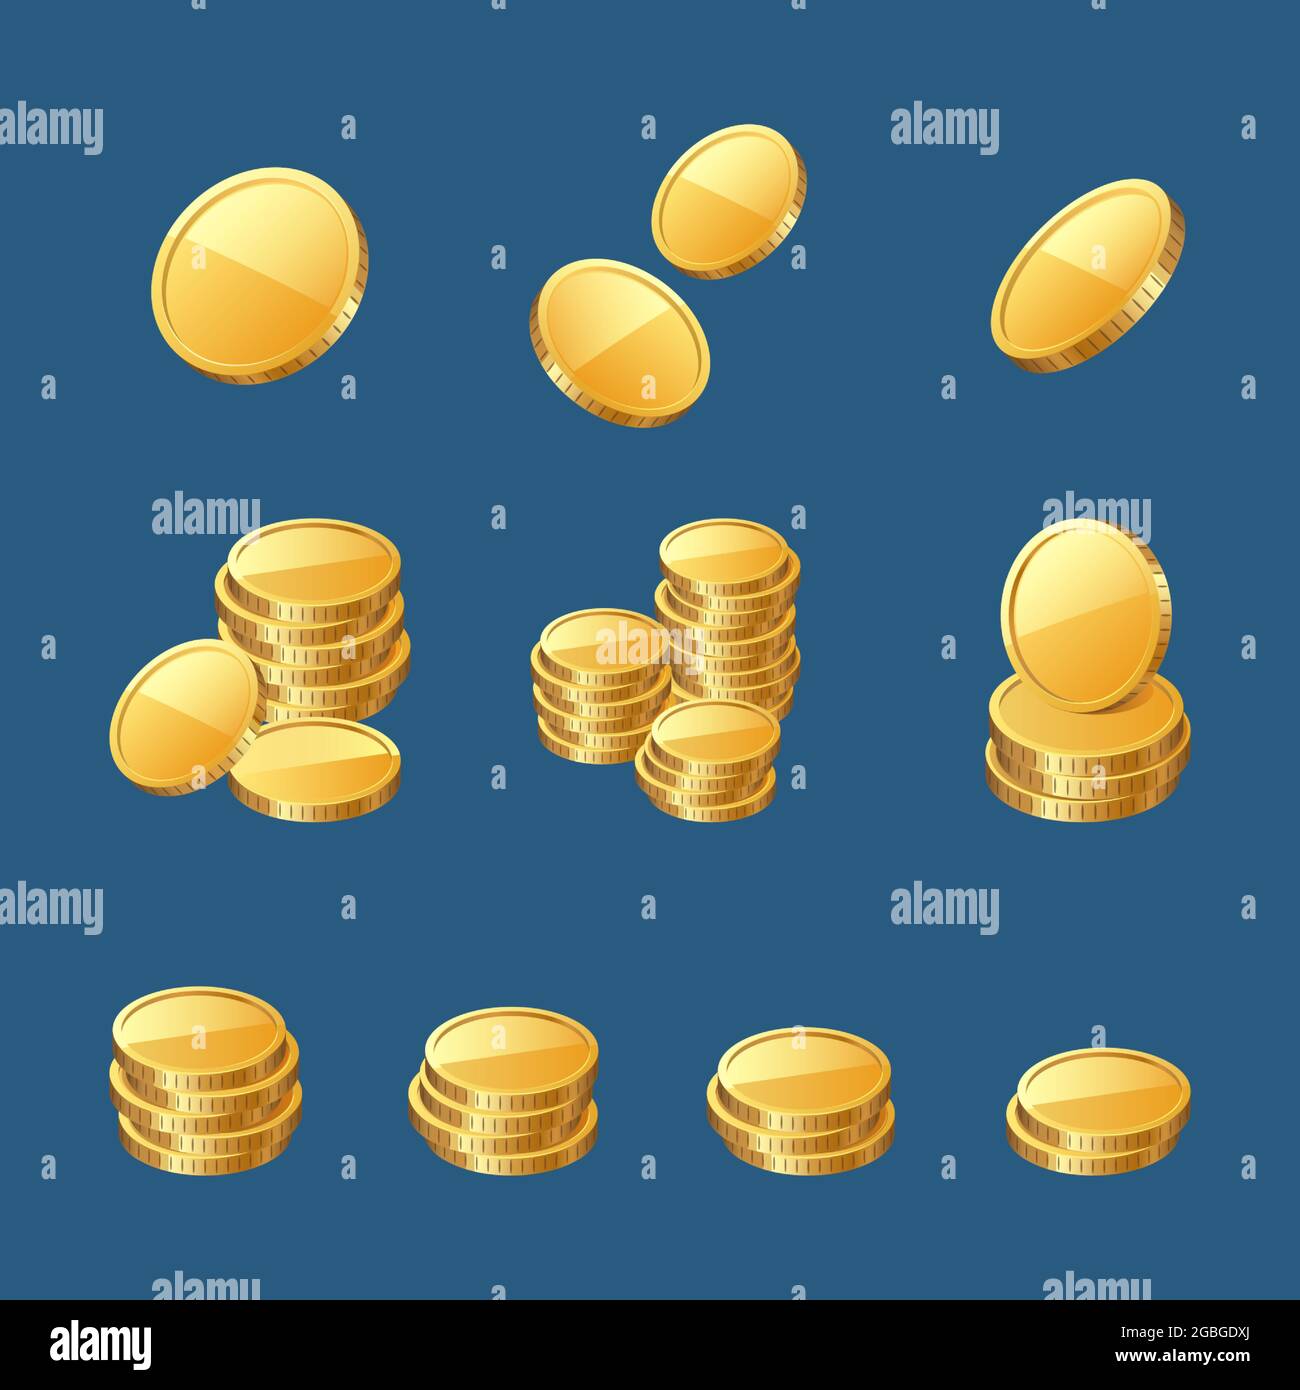 Golden coins, gold or cash money 3d icons set Stock Vector